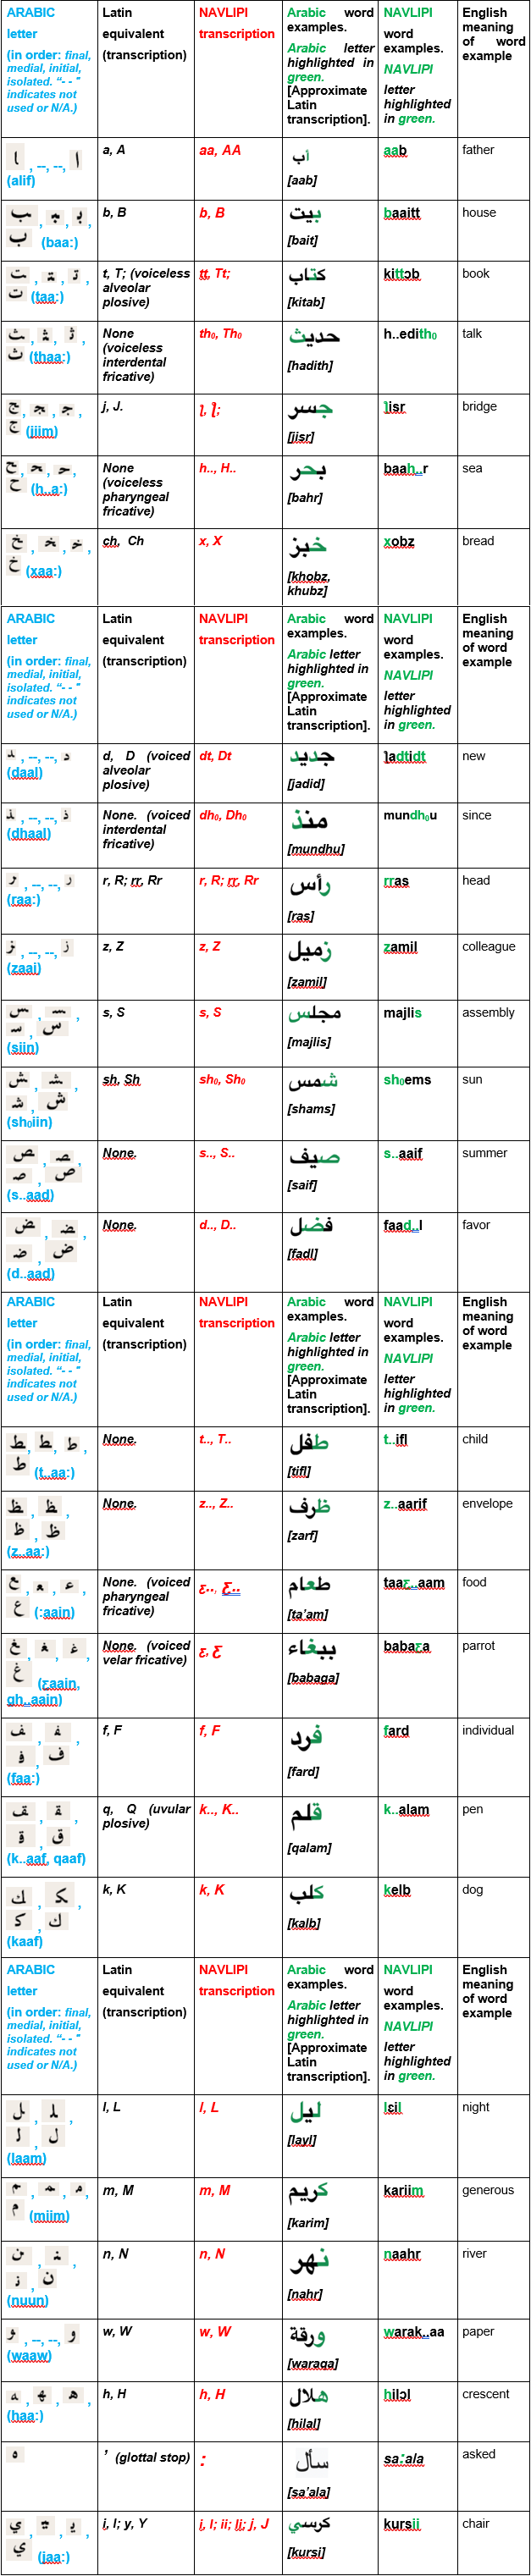 arabic alphabet chart initial medial final